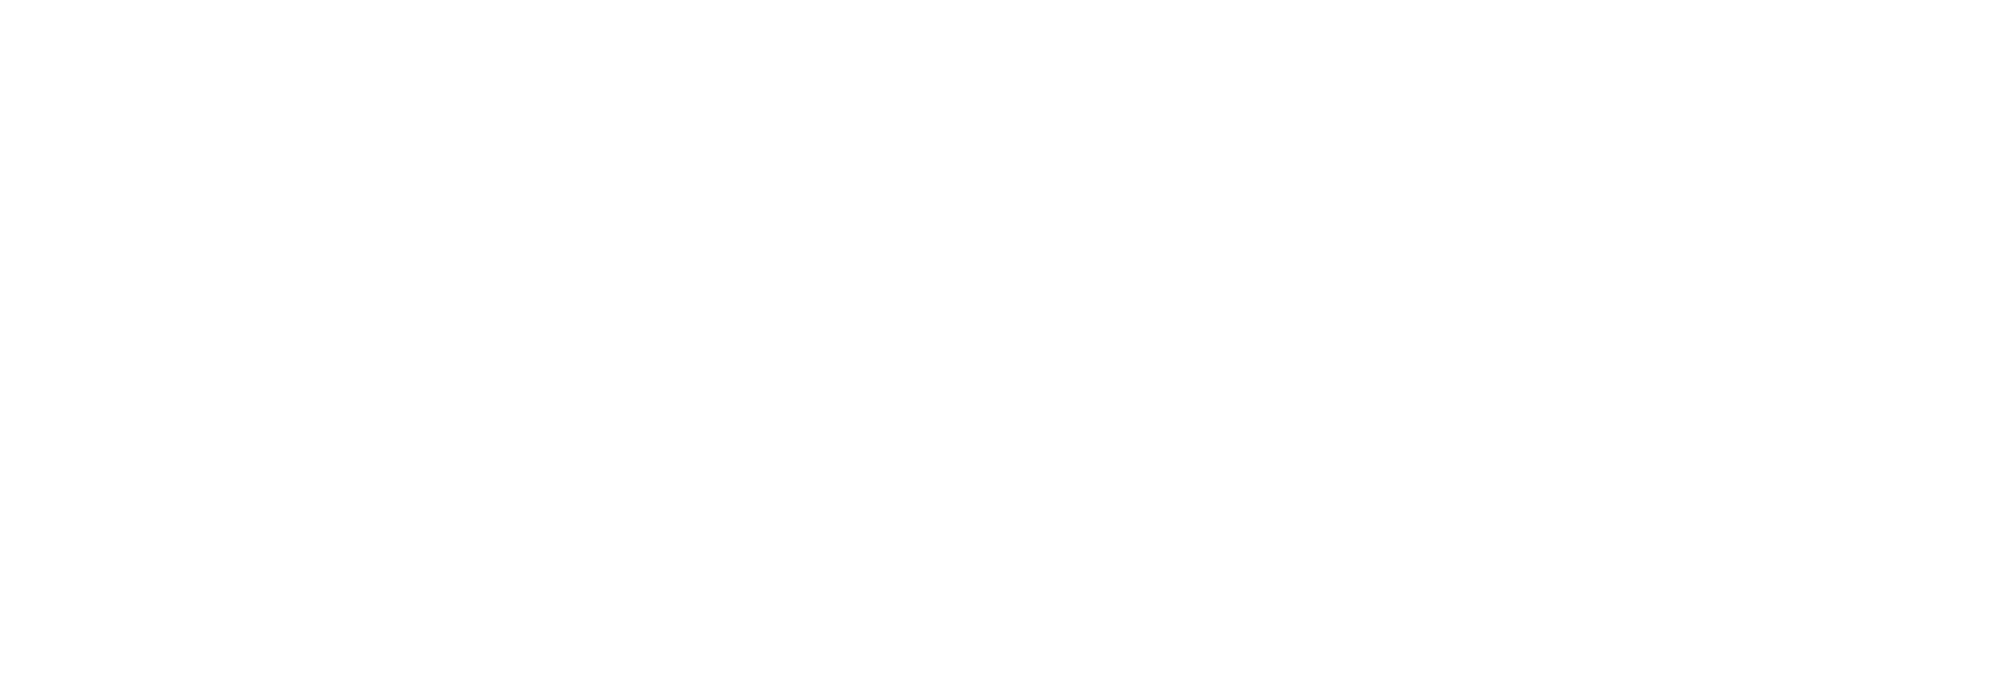 Bulk Vape Juices